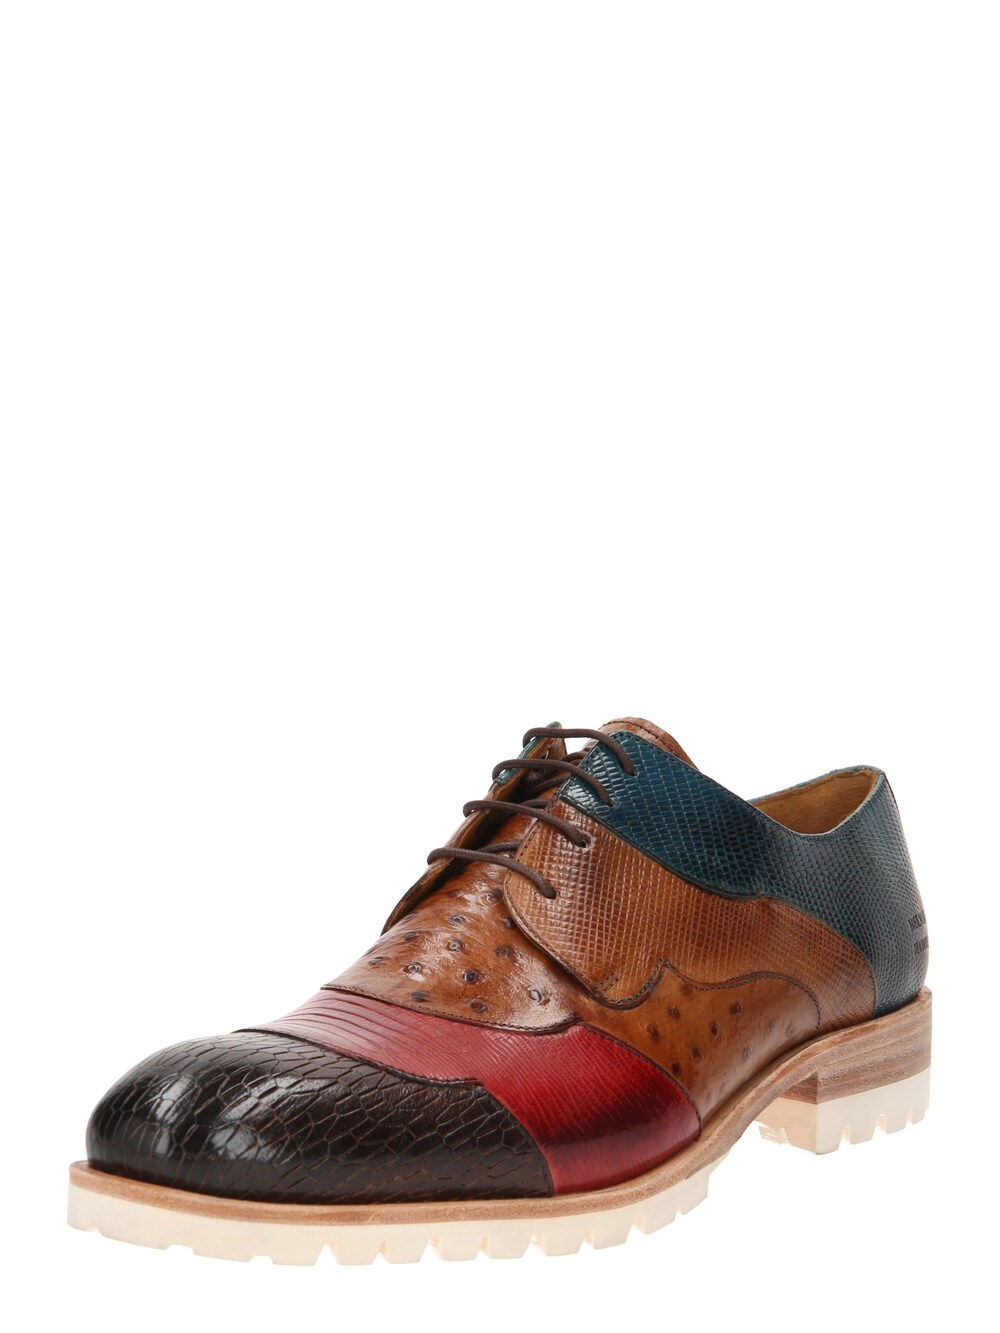 Обувь на шнуровке MELVIN & HAMILTON Patrick, смешанные цвета hamilton patrick monday morning